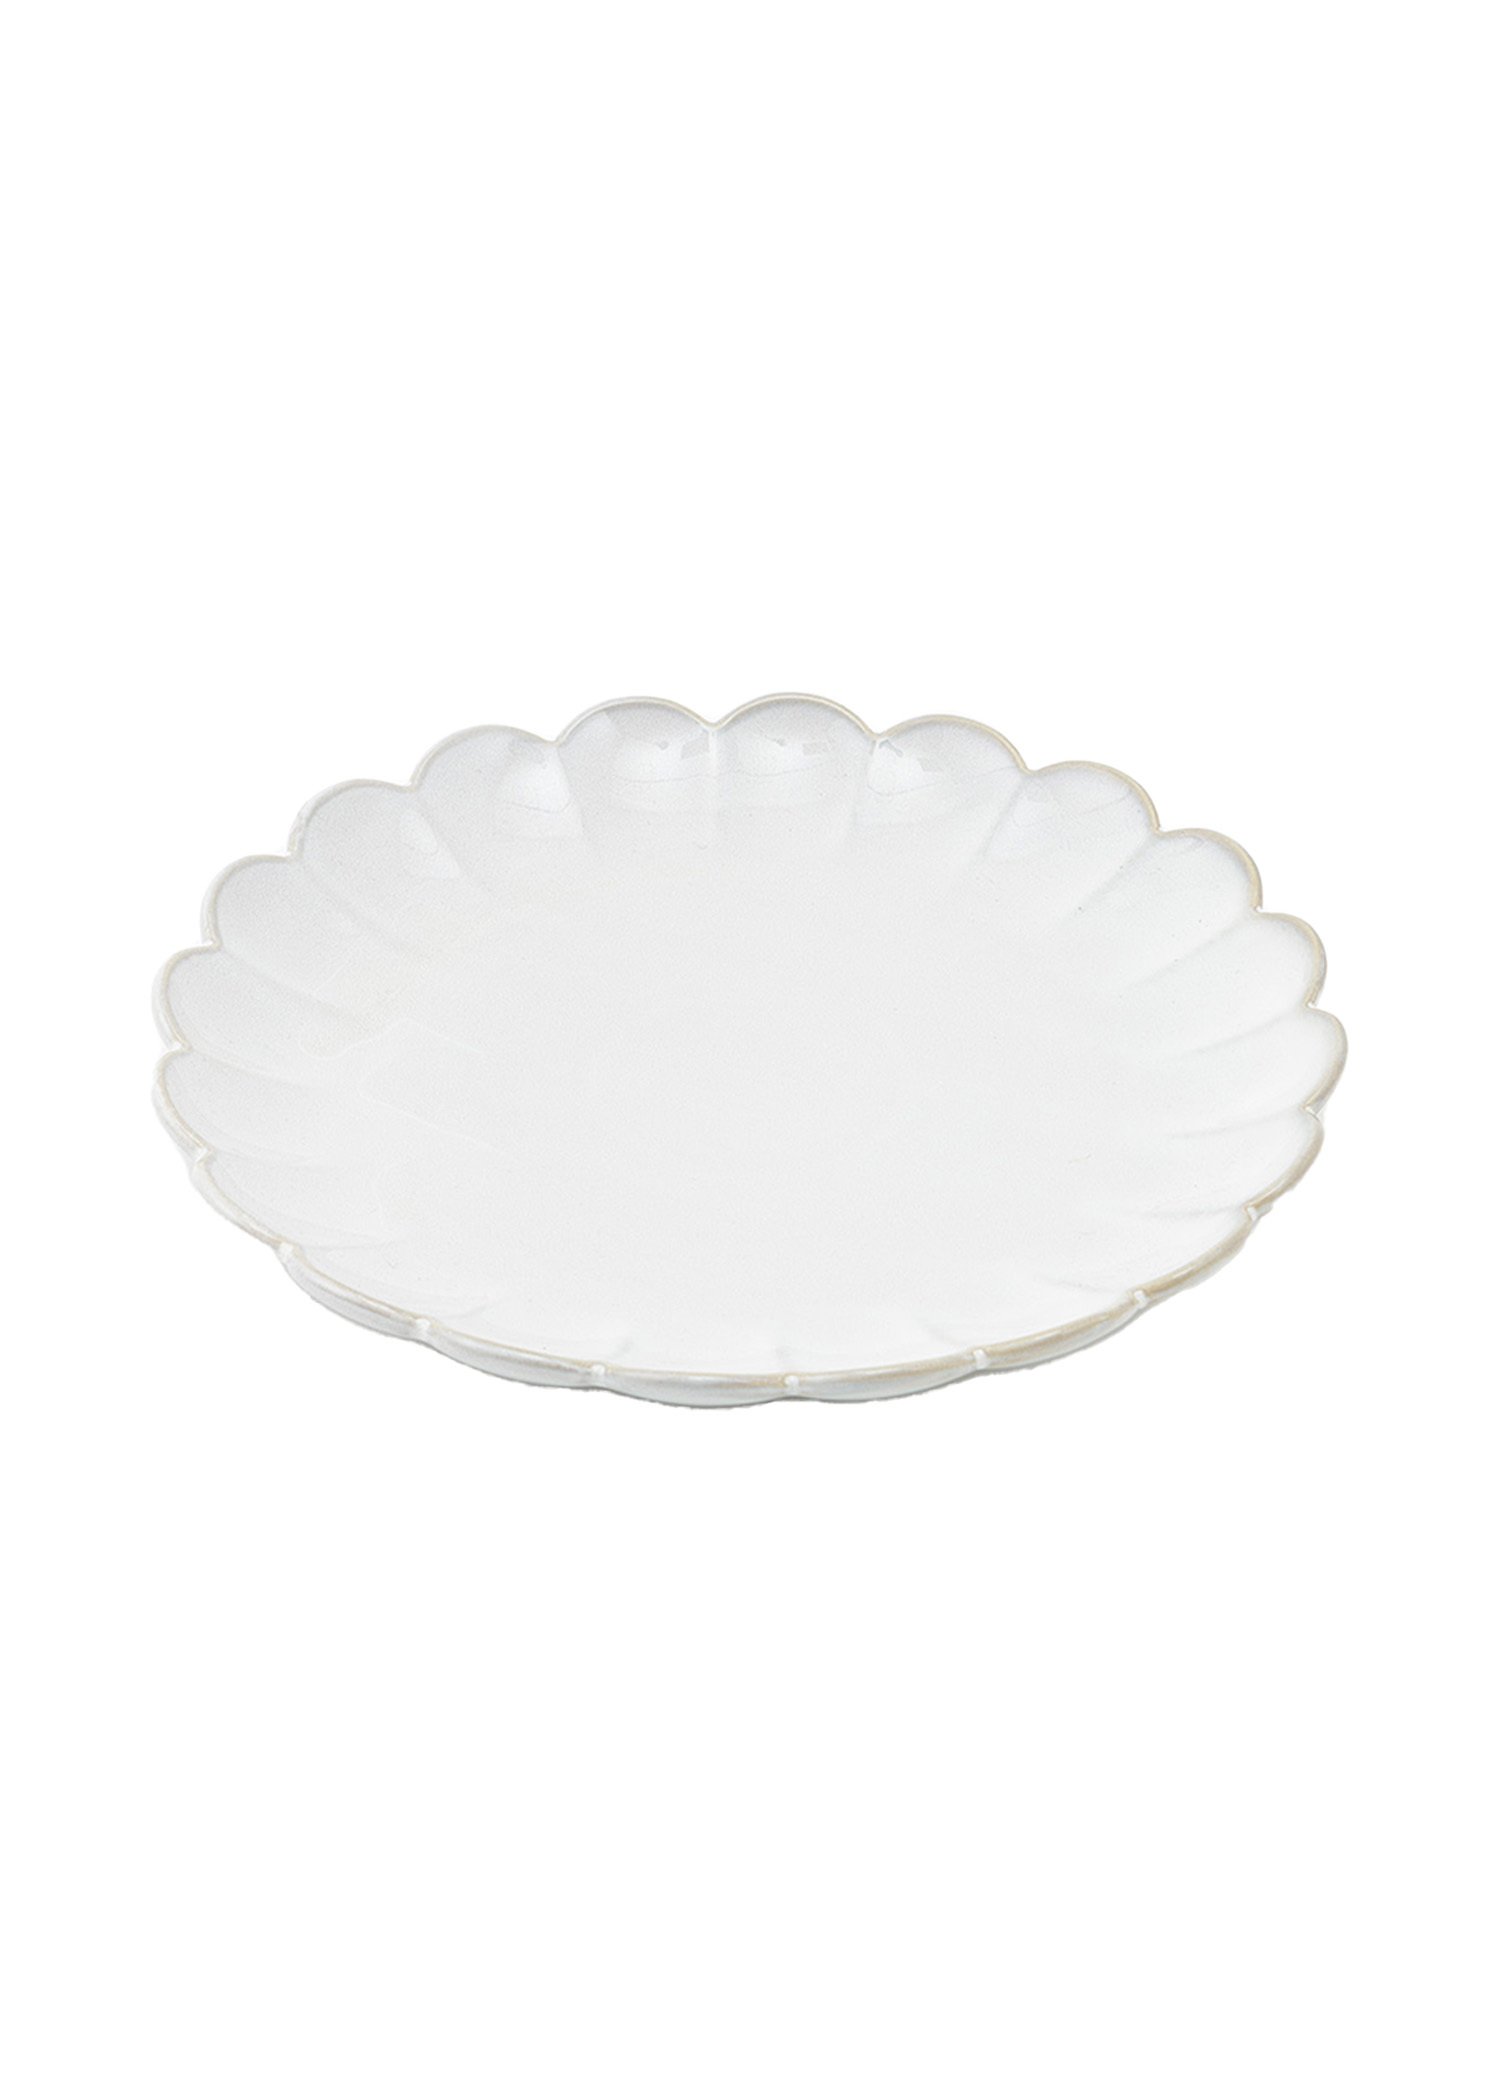 White stoneware plate